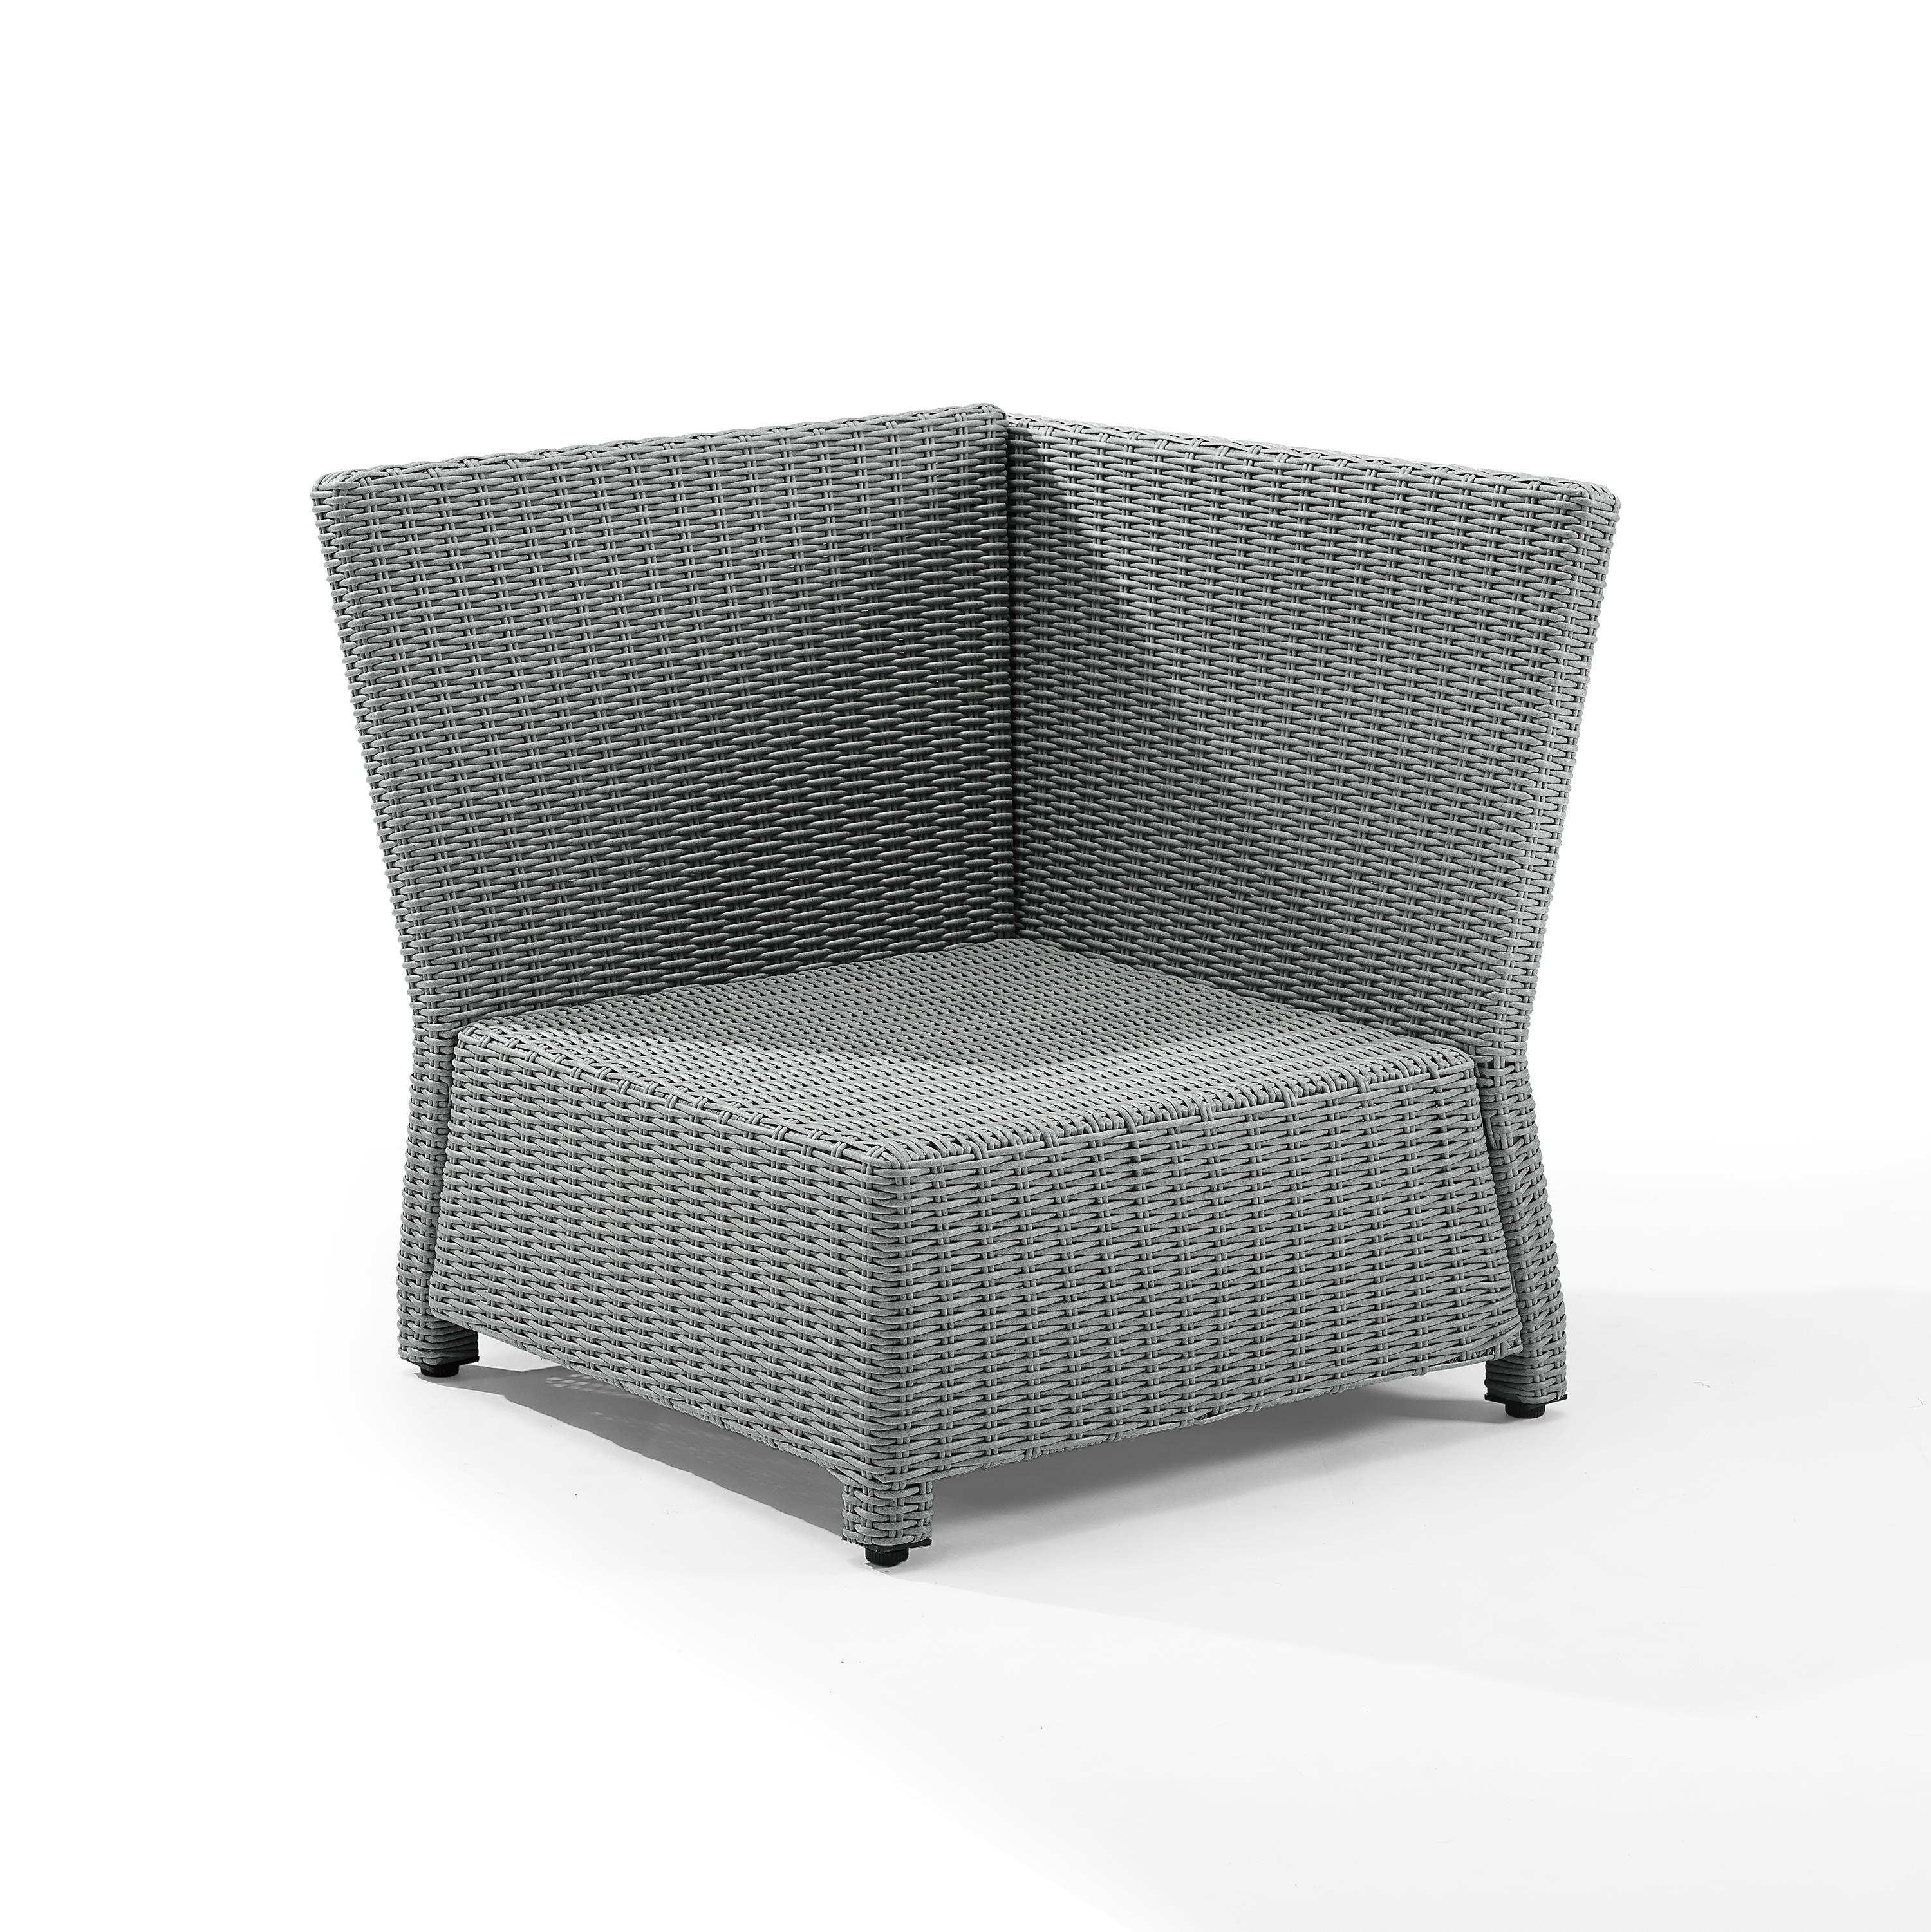 Crosley Bradenton Wicker Patio Corner Chair in Gray - image 4 of 10